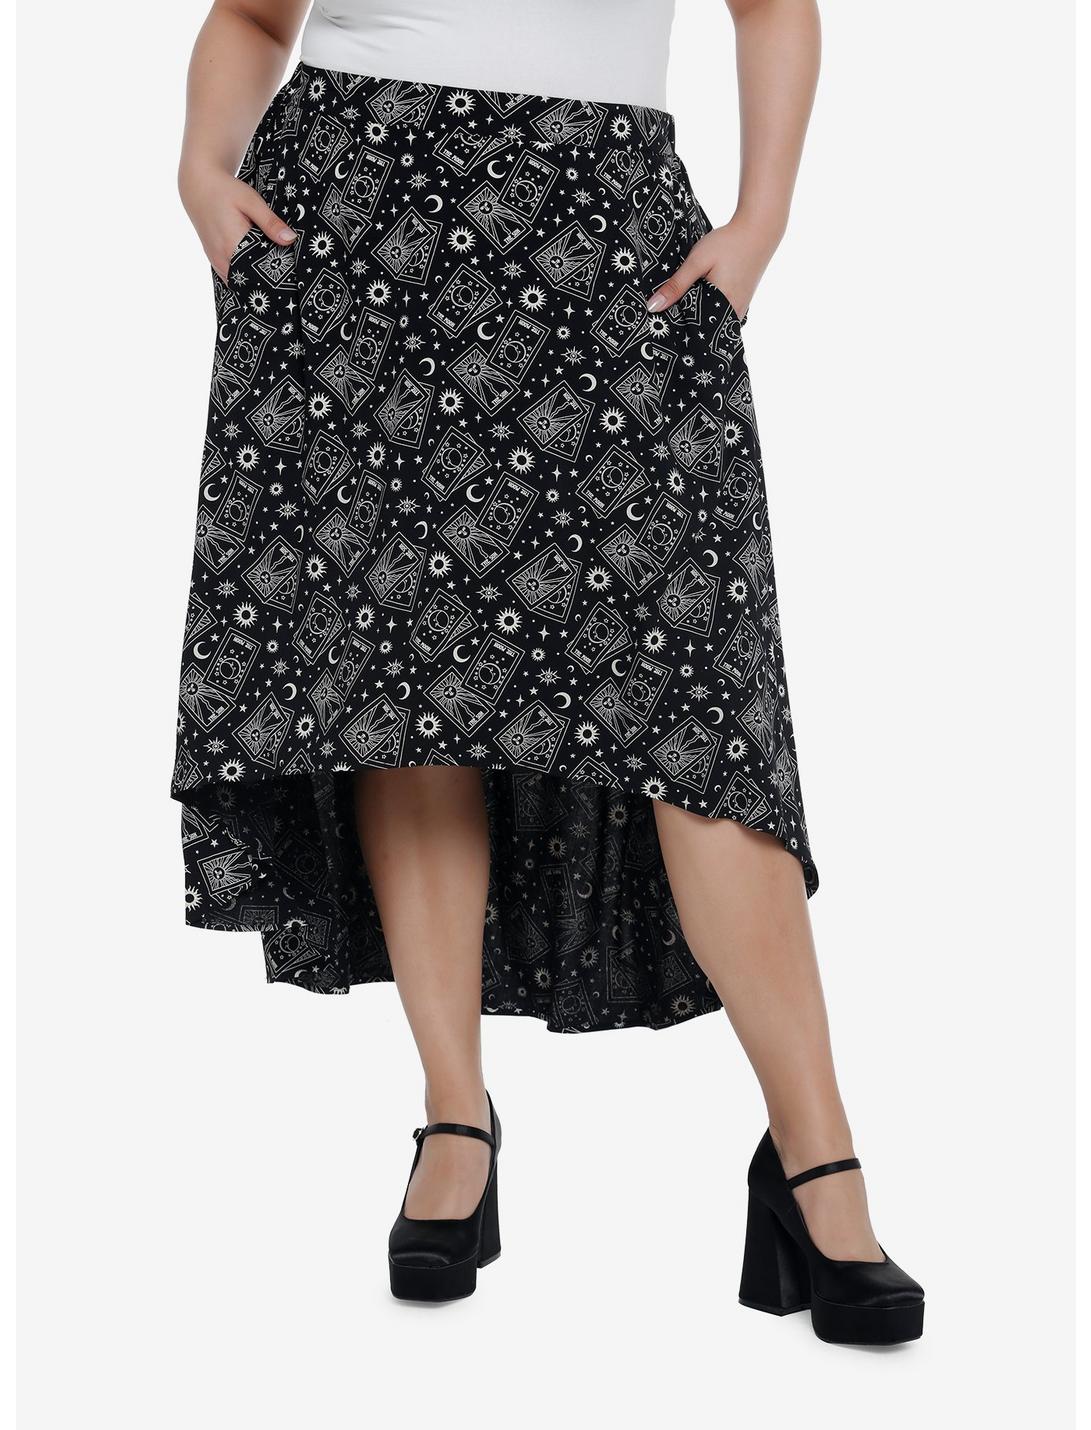 Cosmic Aura Tarot Card Hi-Low Skirt Plus Size, BLACK, hi-res